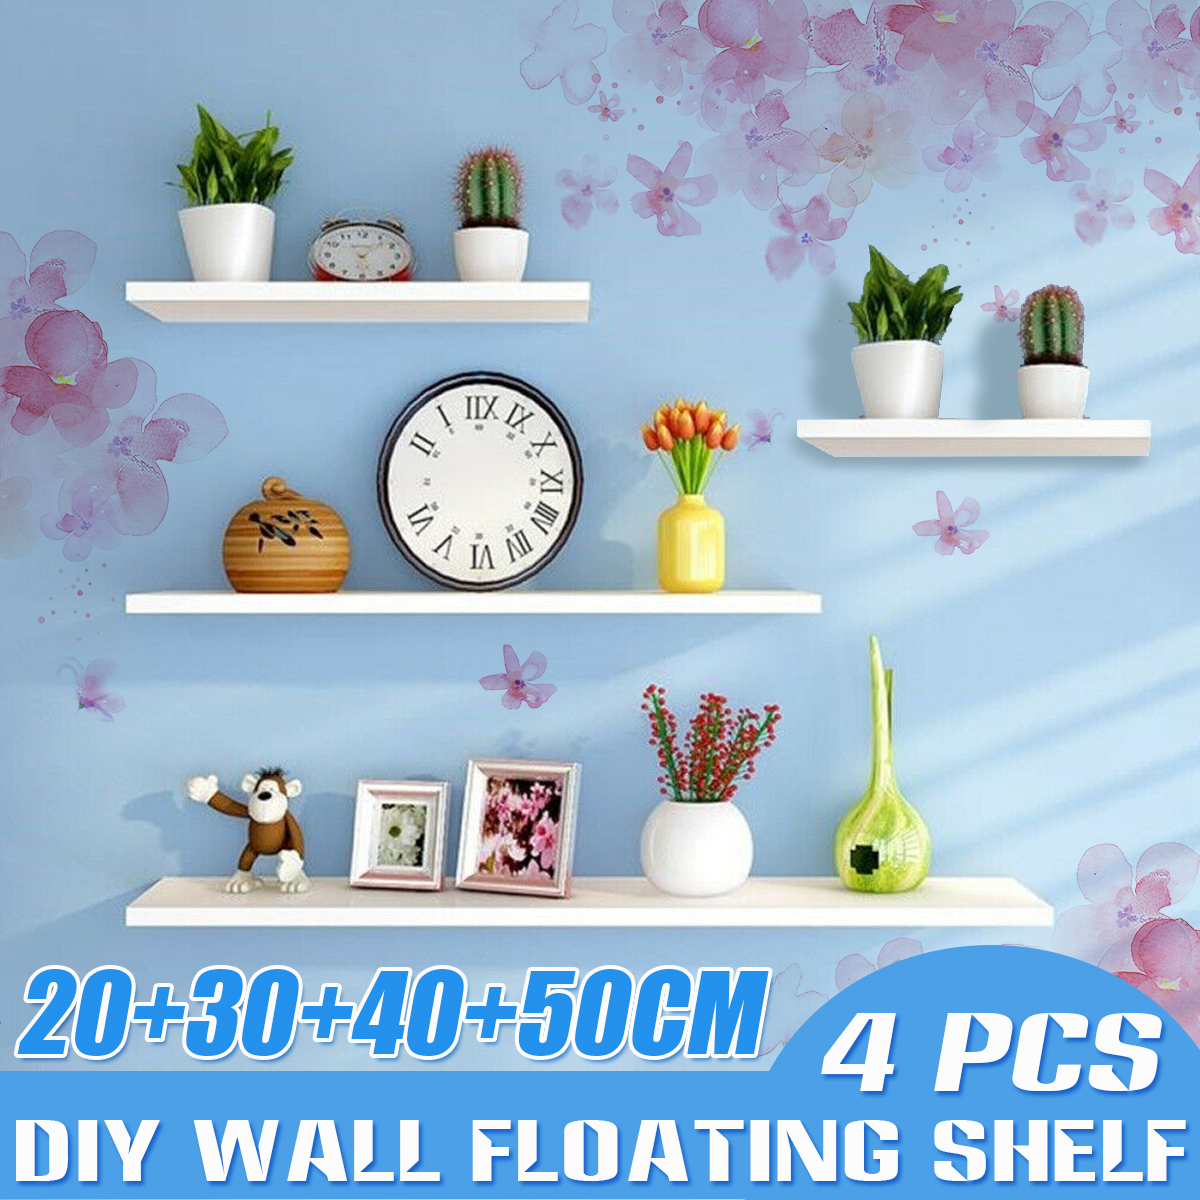 4-PcsSet-DIY-Wall-Shelves-Shelf-Floating-Display-Decor-Home-Wood-Wall-Mounted-1841567-1